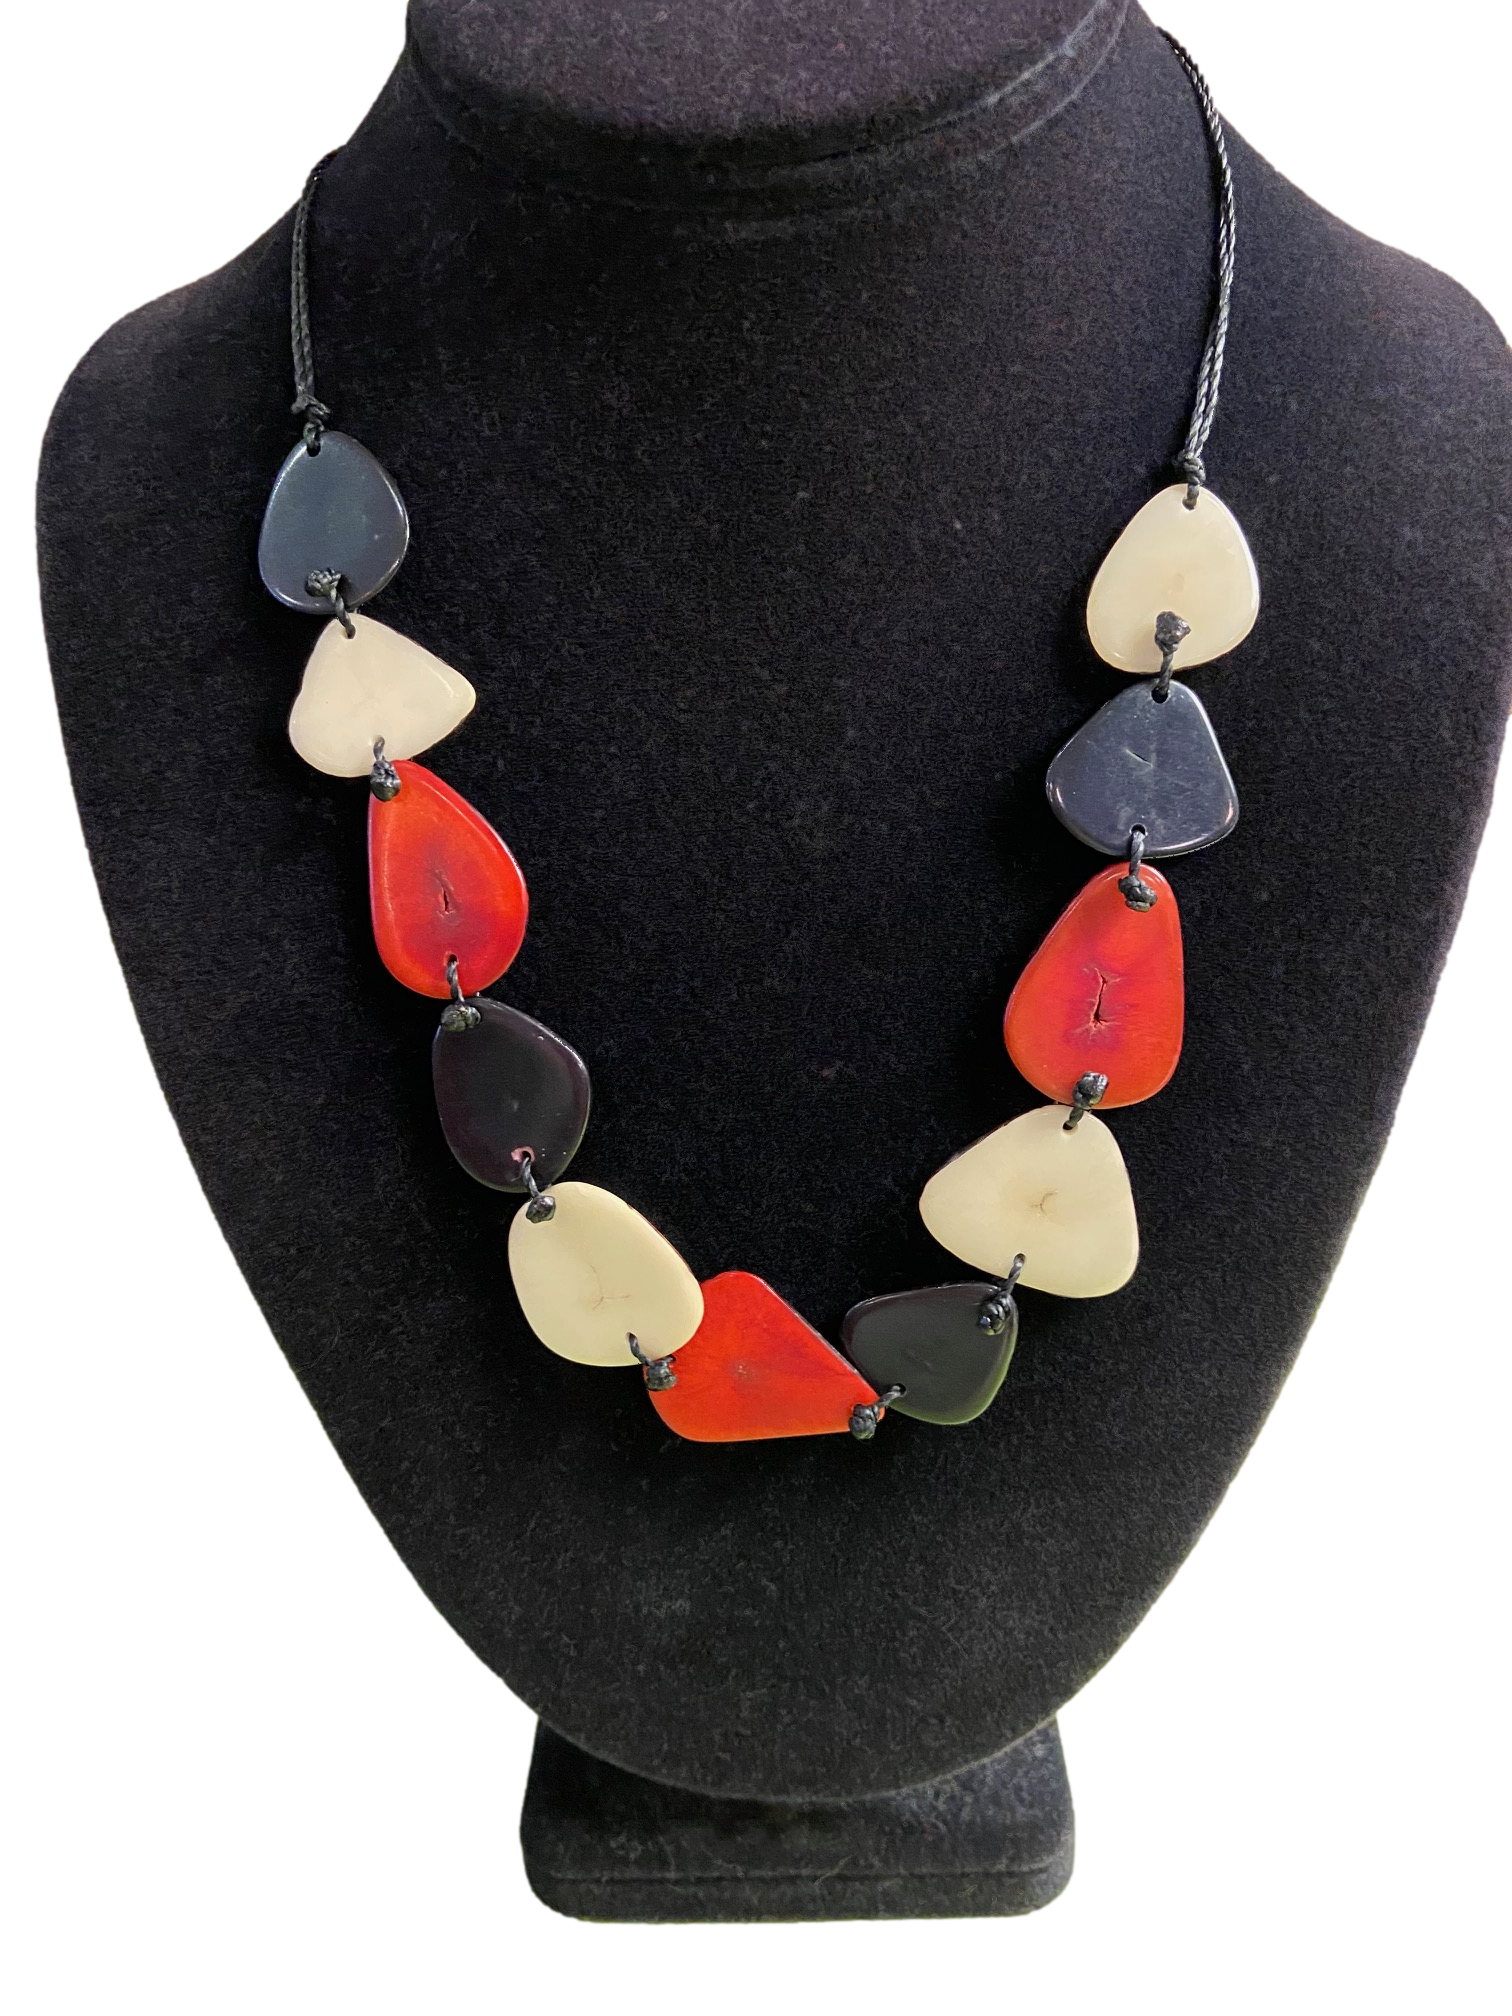 Canoa 1-STRAND Red Black Stone Tagua Necklace